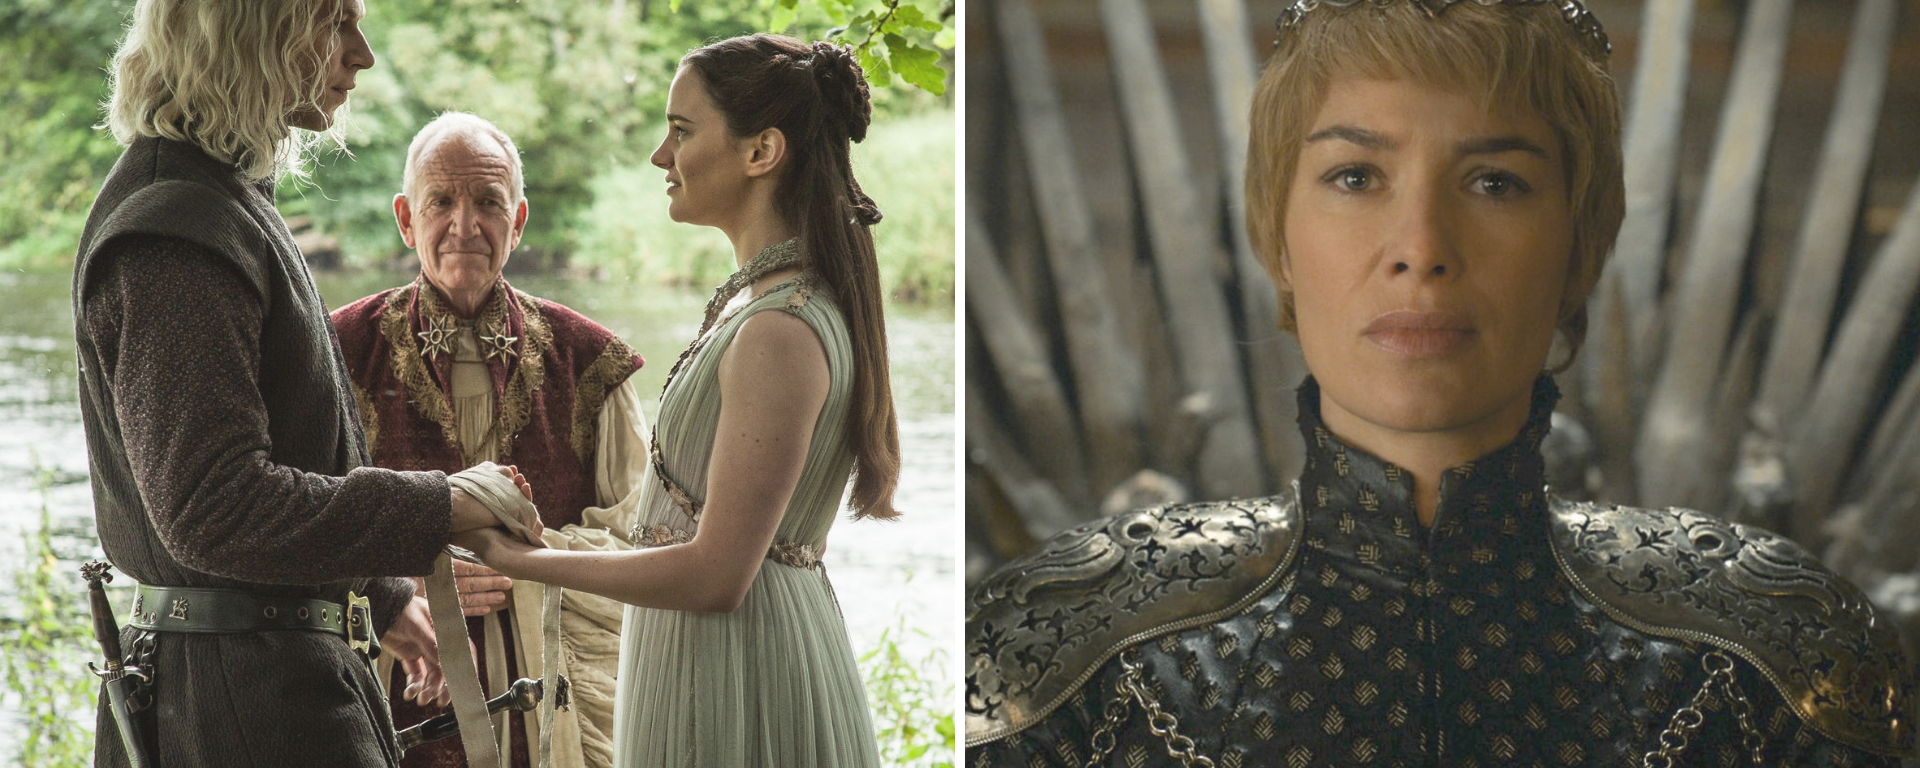 left: Lyanna Stark and Rhaegar Targaryen, Right: Cersei Lannister